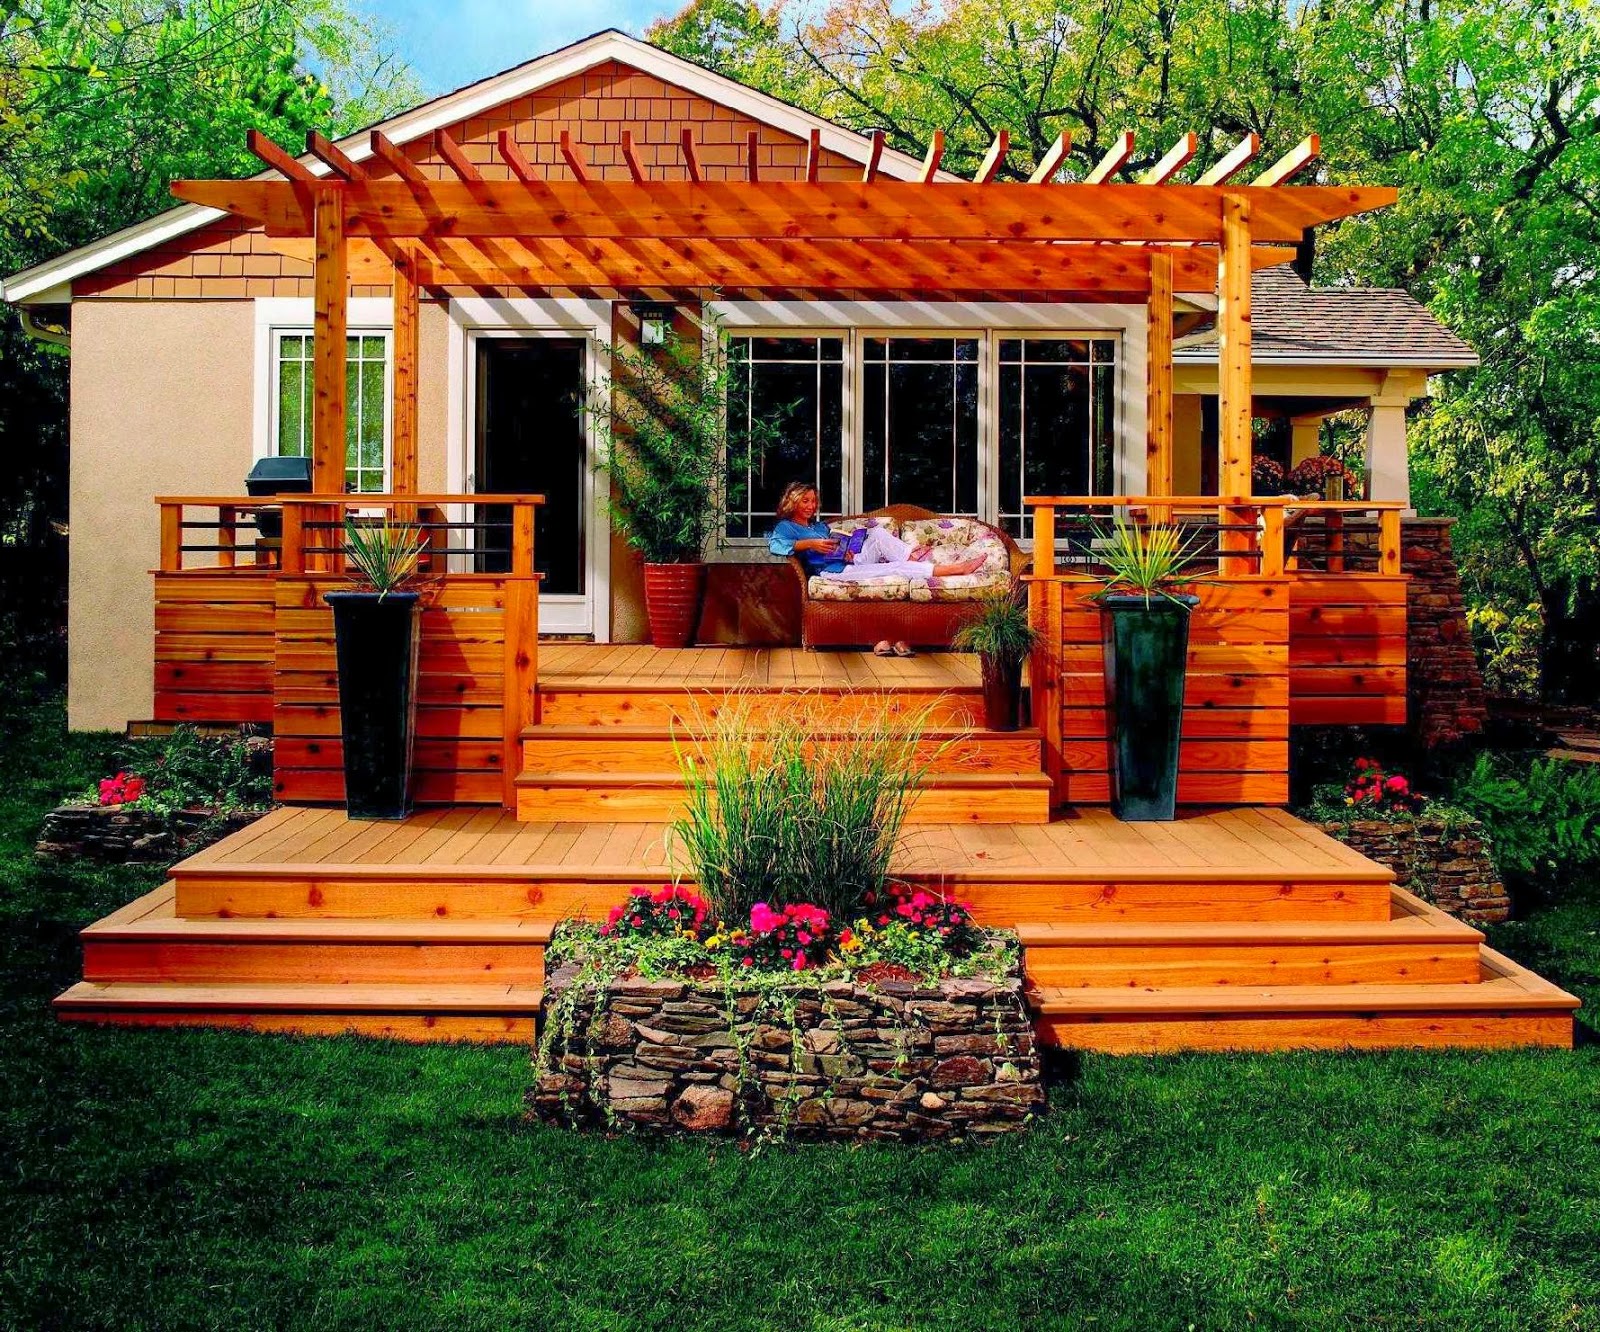 Awesome backyard deck design